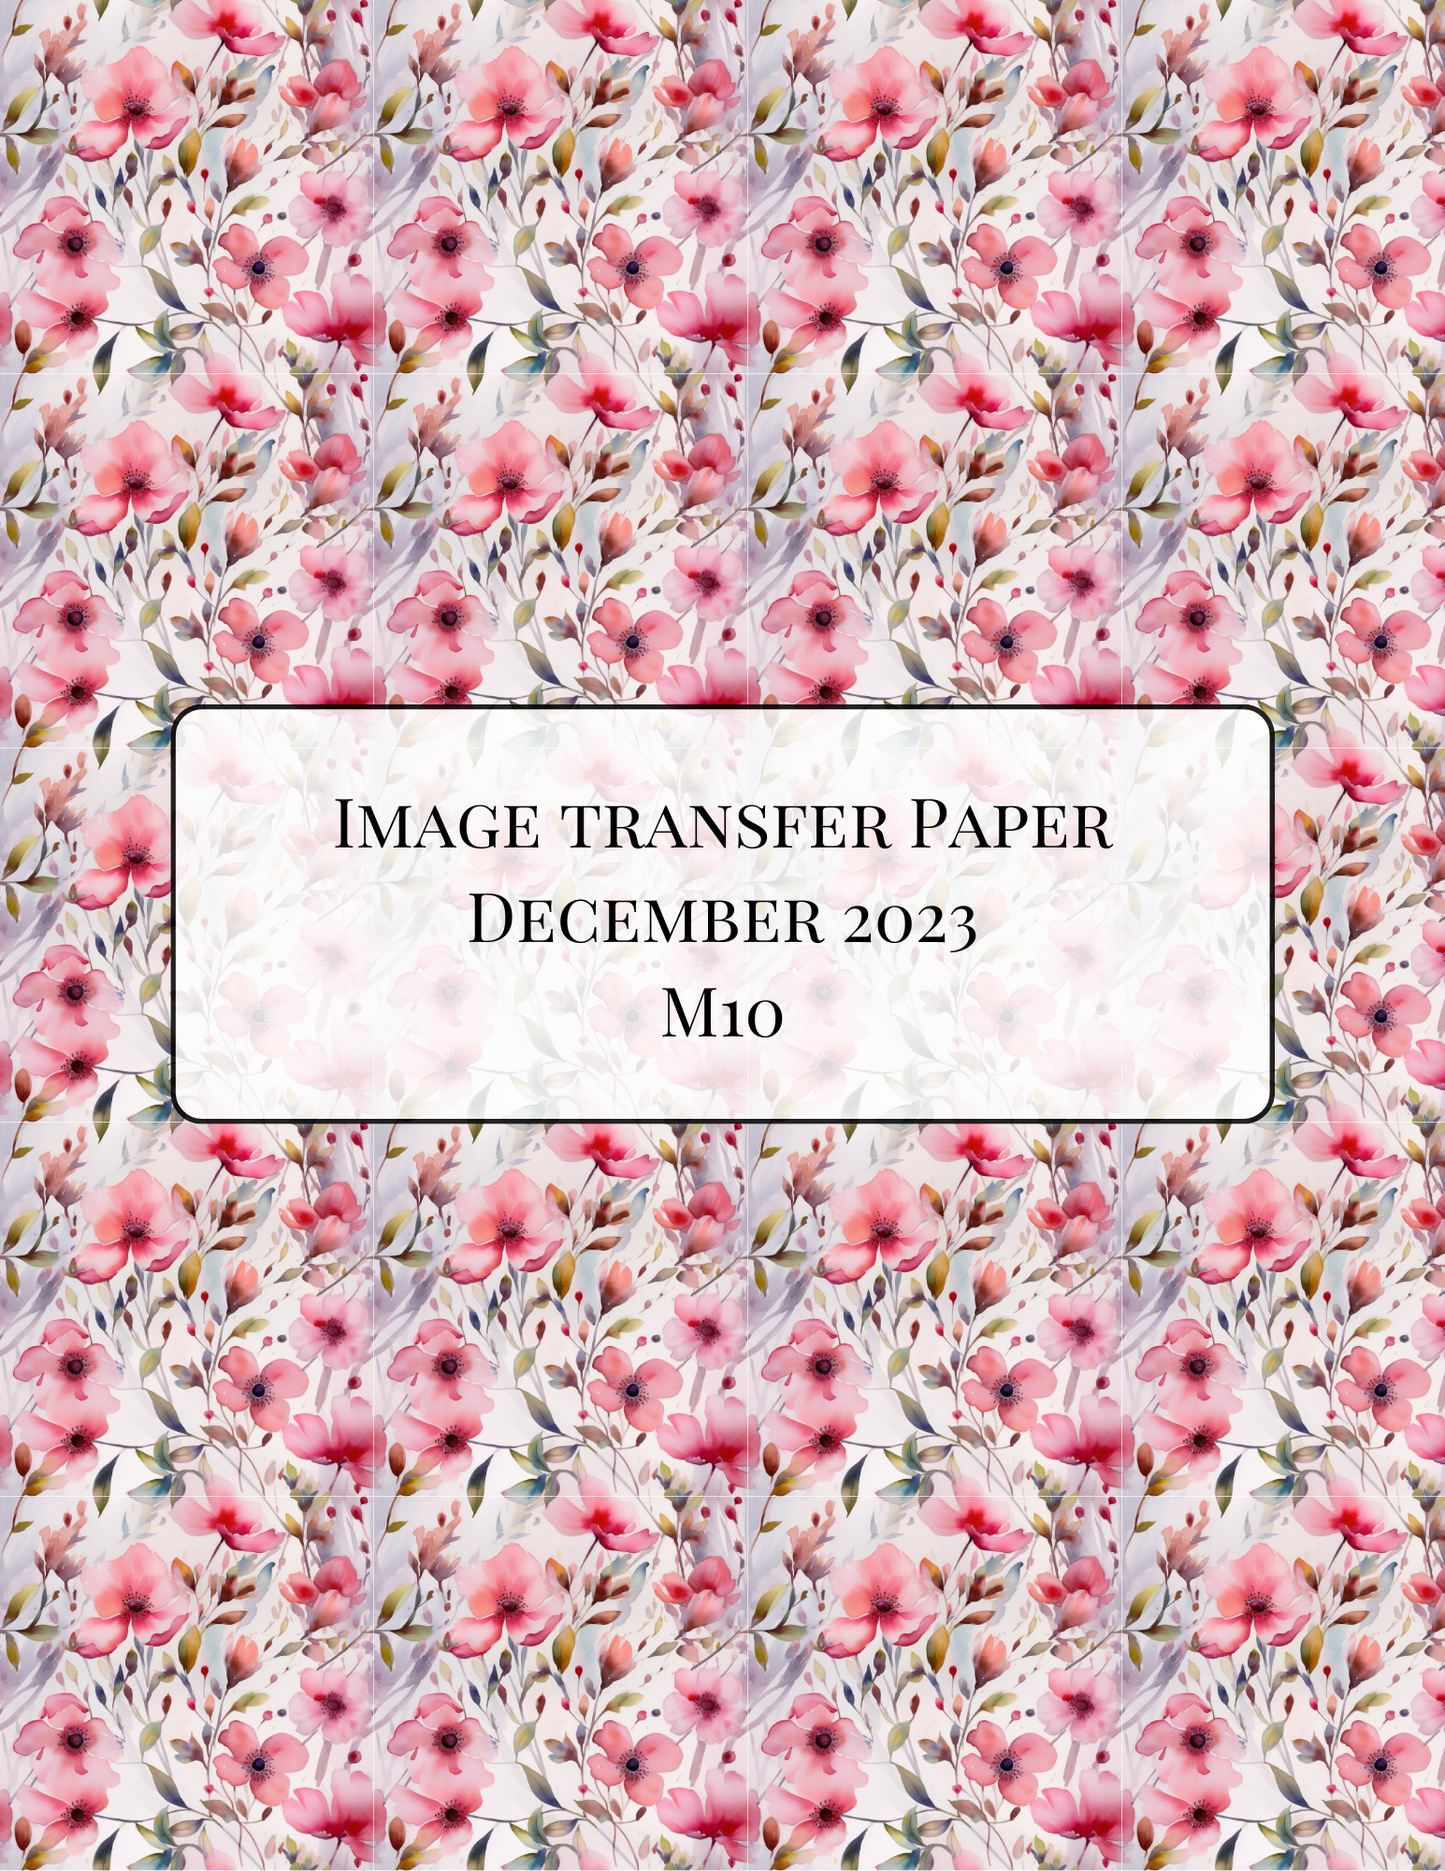 M10 Transfer Paper - December 2023 Launch